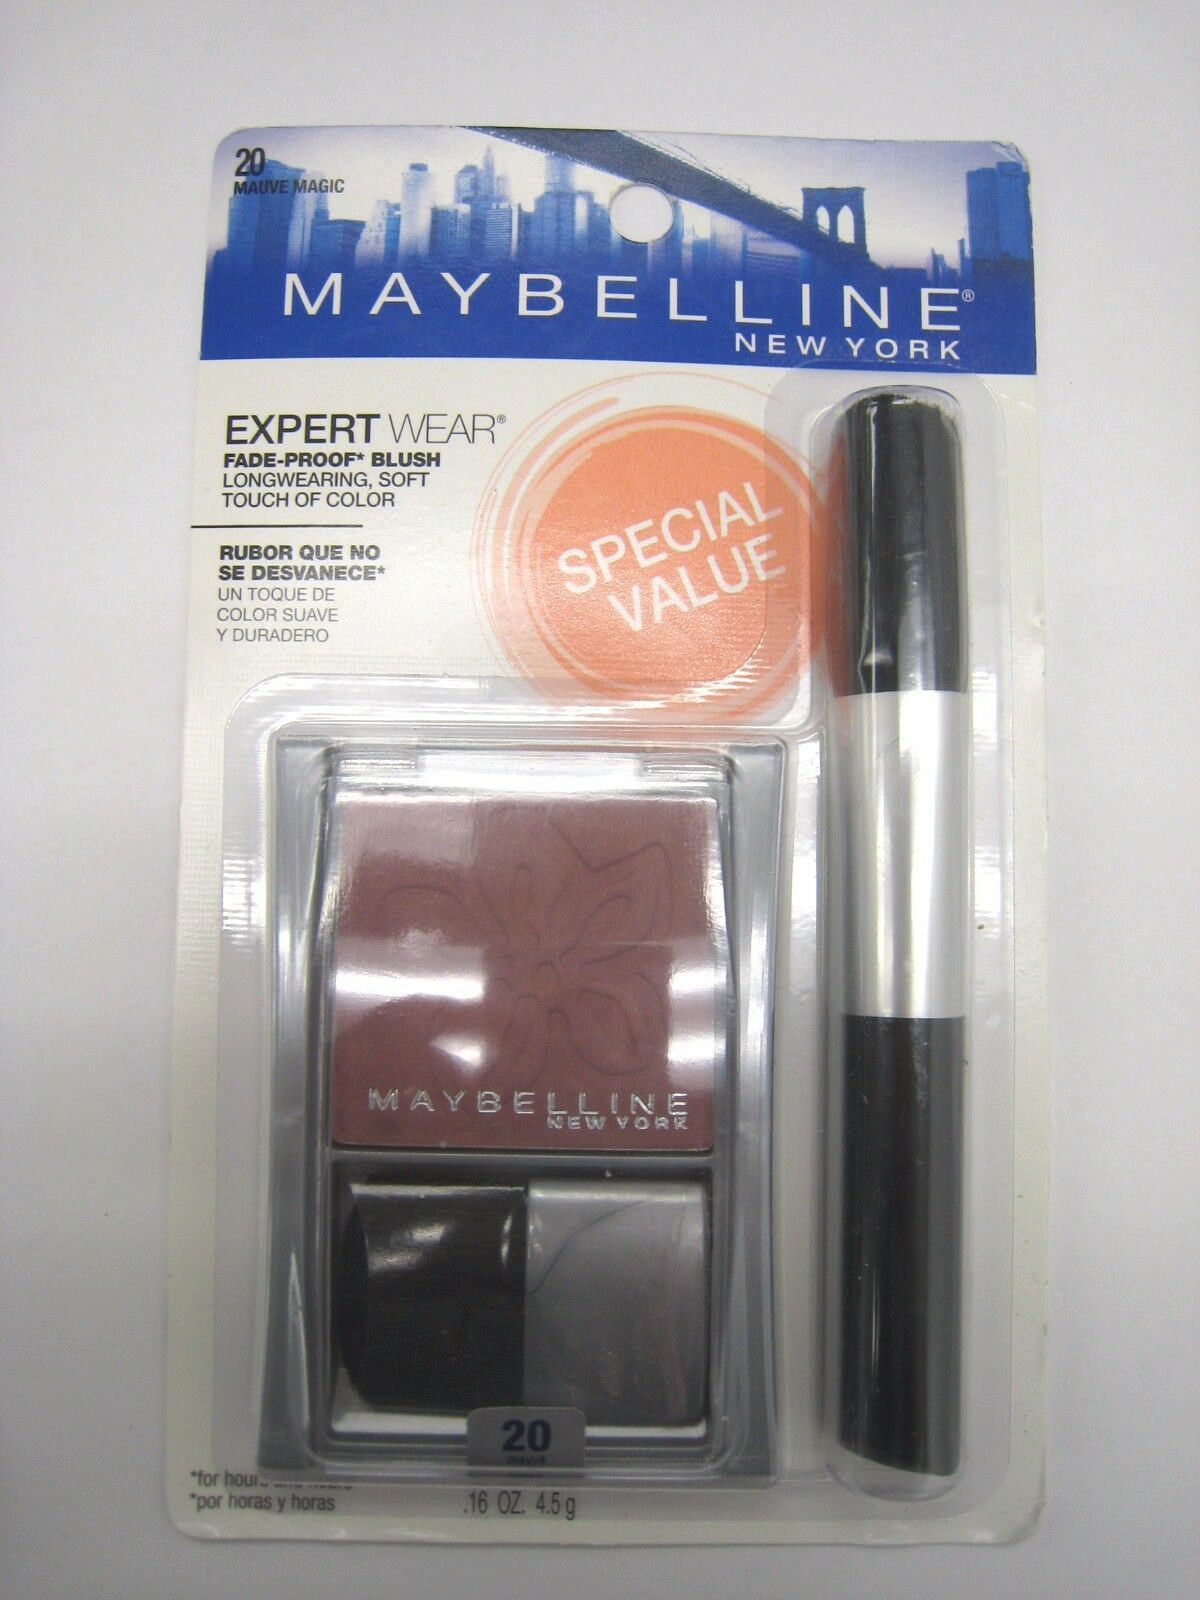 Maybelline ExpertWear Fade Proof Blush W/Blush Brush- 20 Mauve Magic *2 Pack* - $12.99